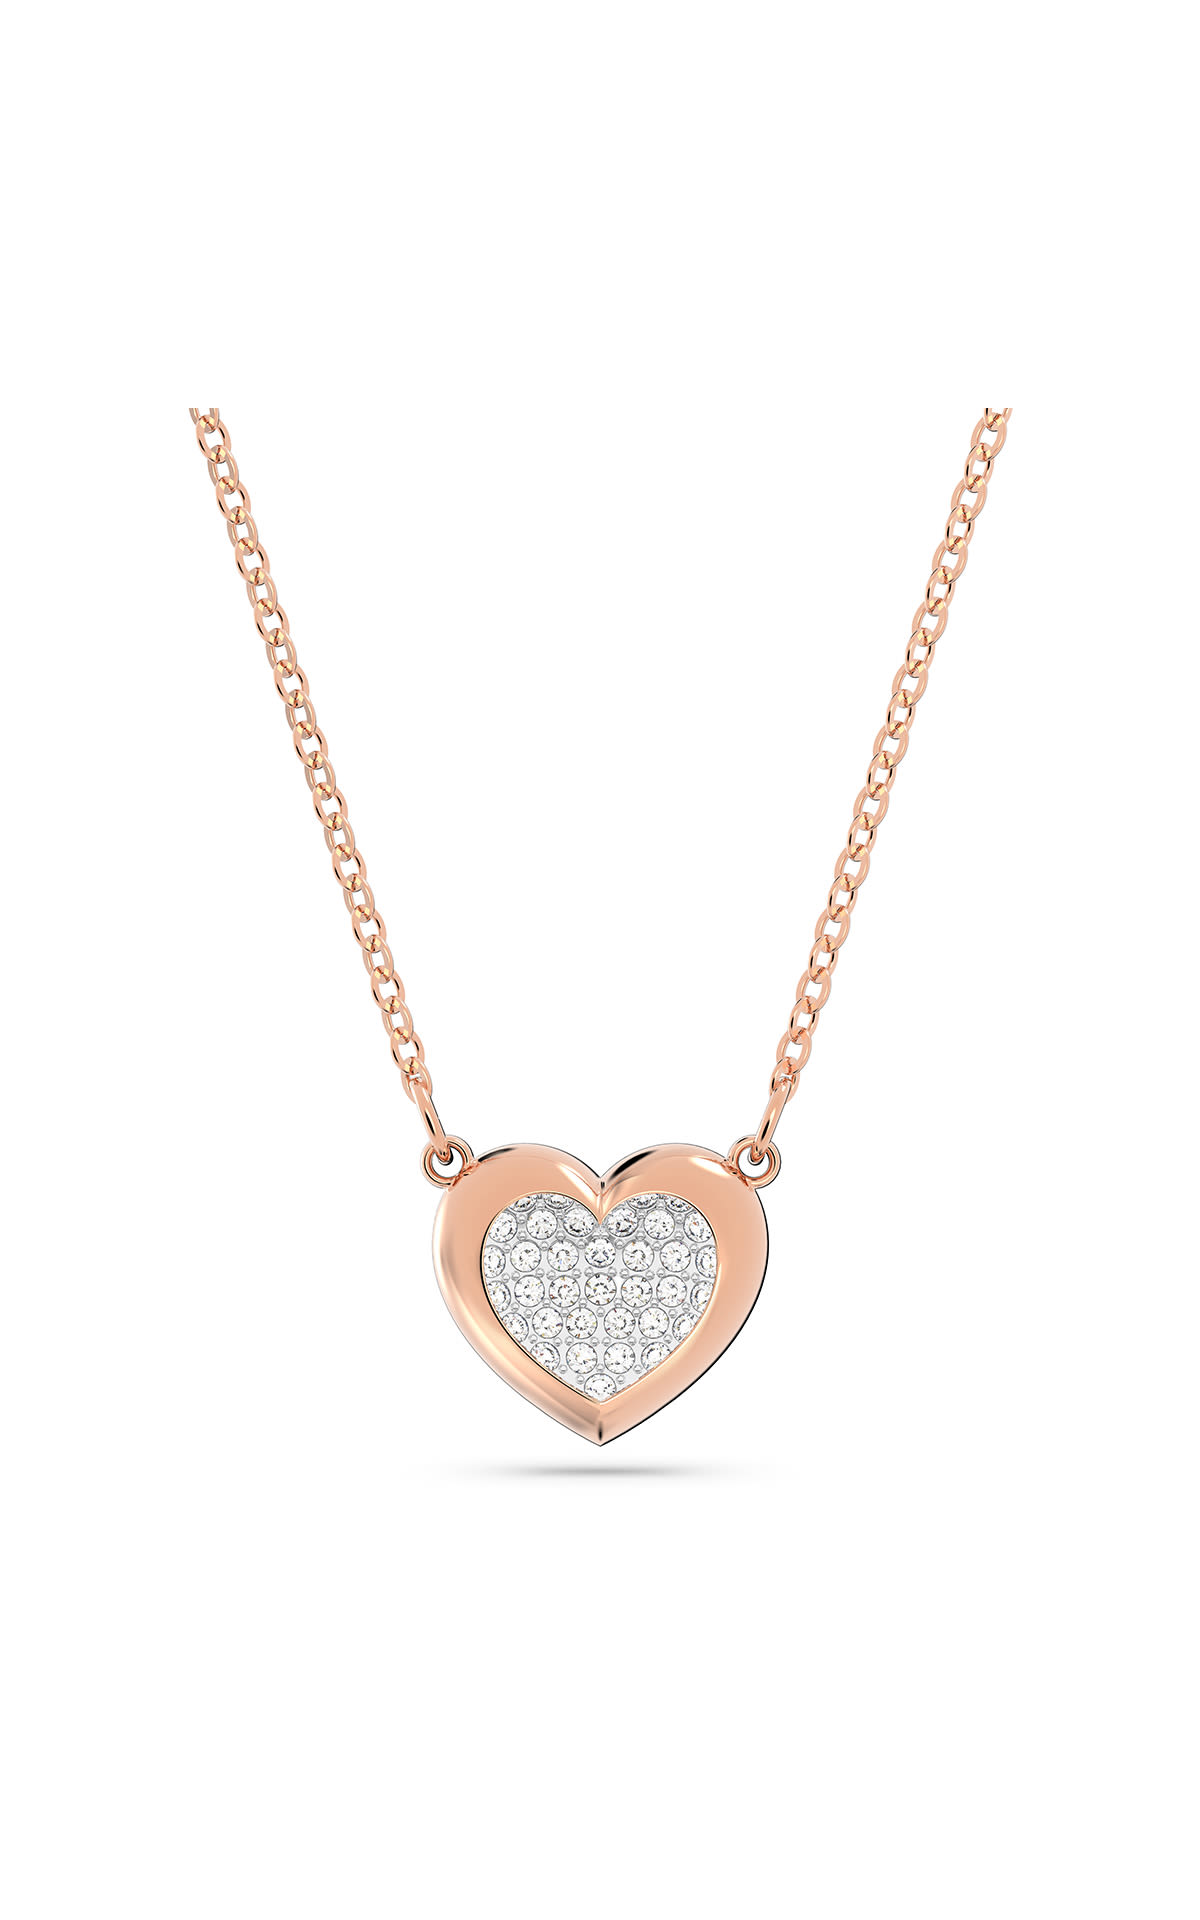 Swarovski Heart necklace